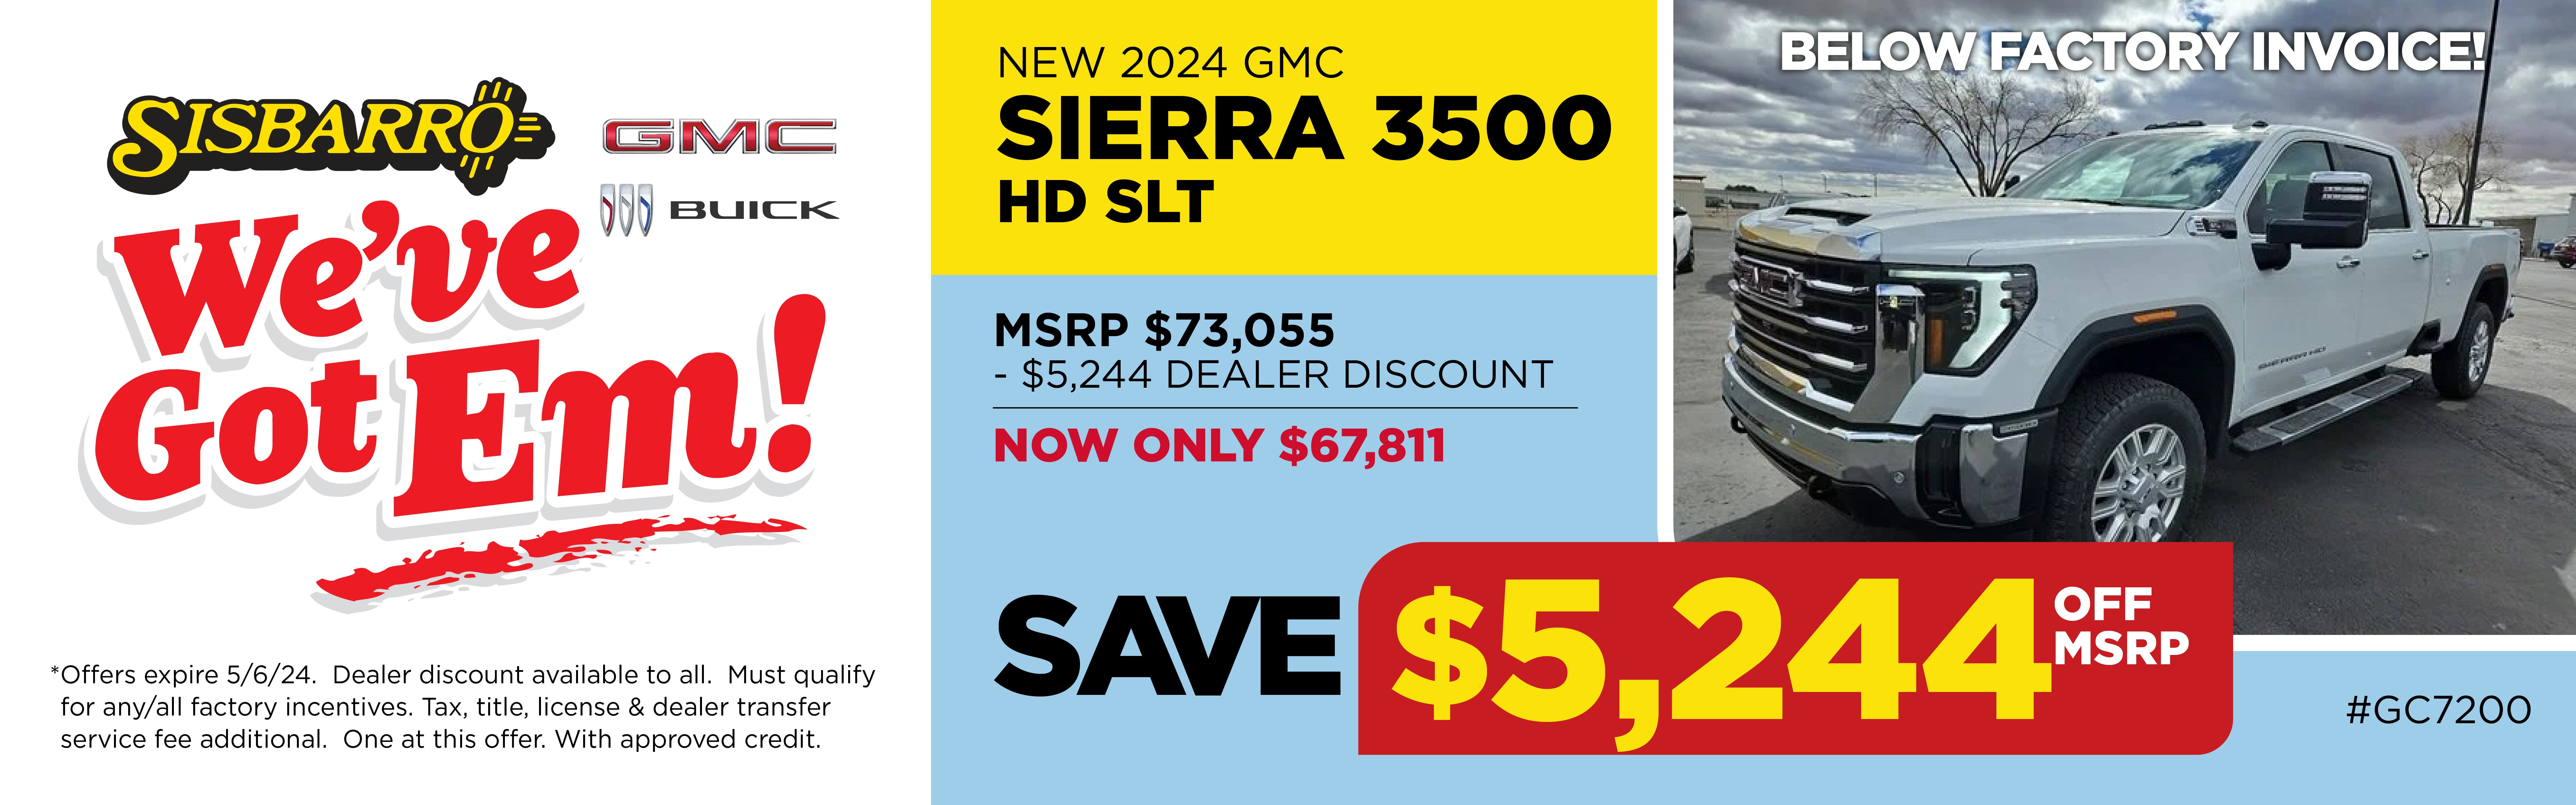 New 2024 GMC Sierra 3500 HD SLT